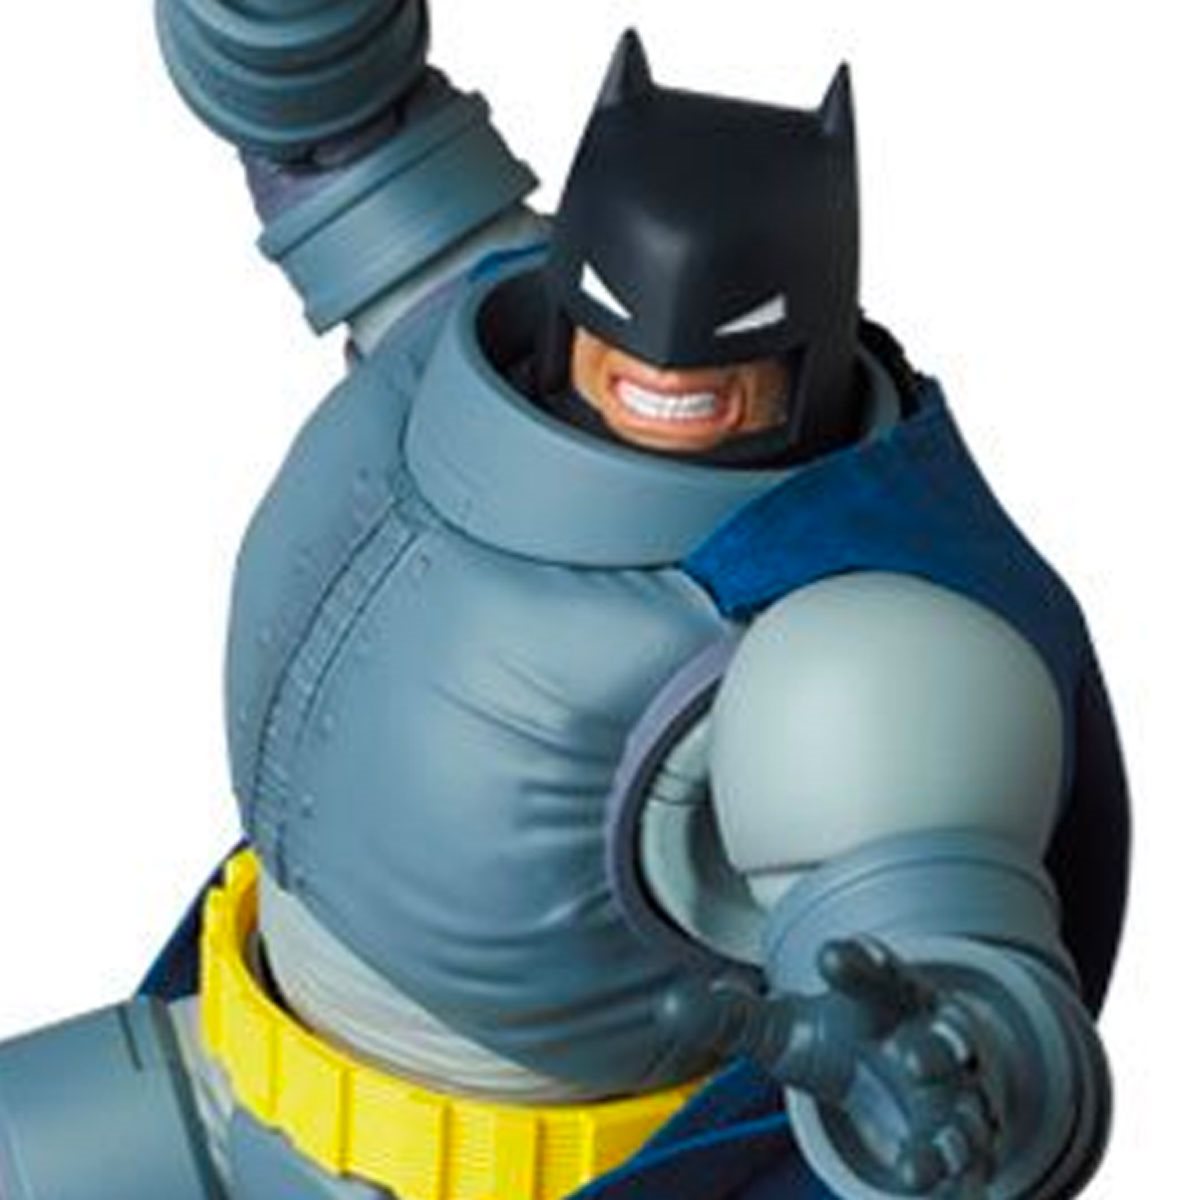 Medicom Mafex The Dark Knight Returns 6" Batman Action Figure for sale online 